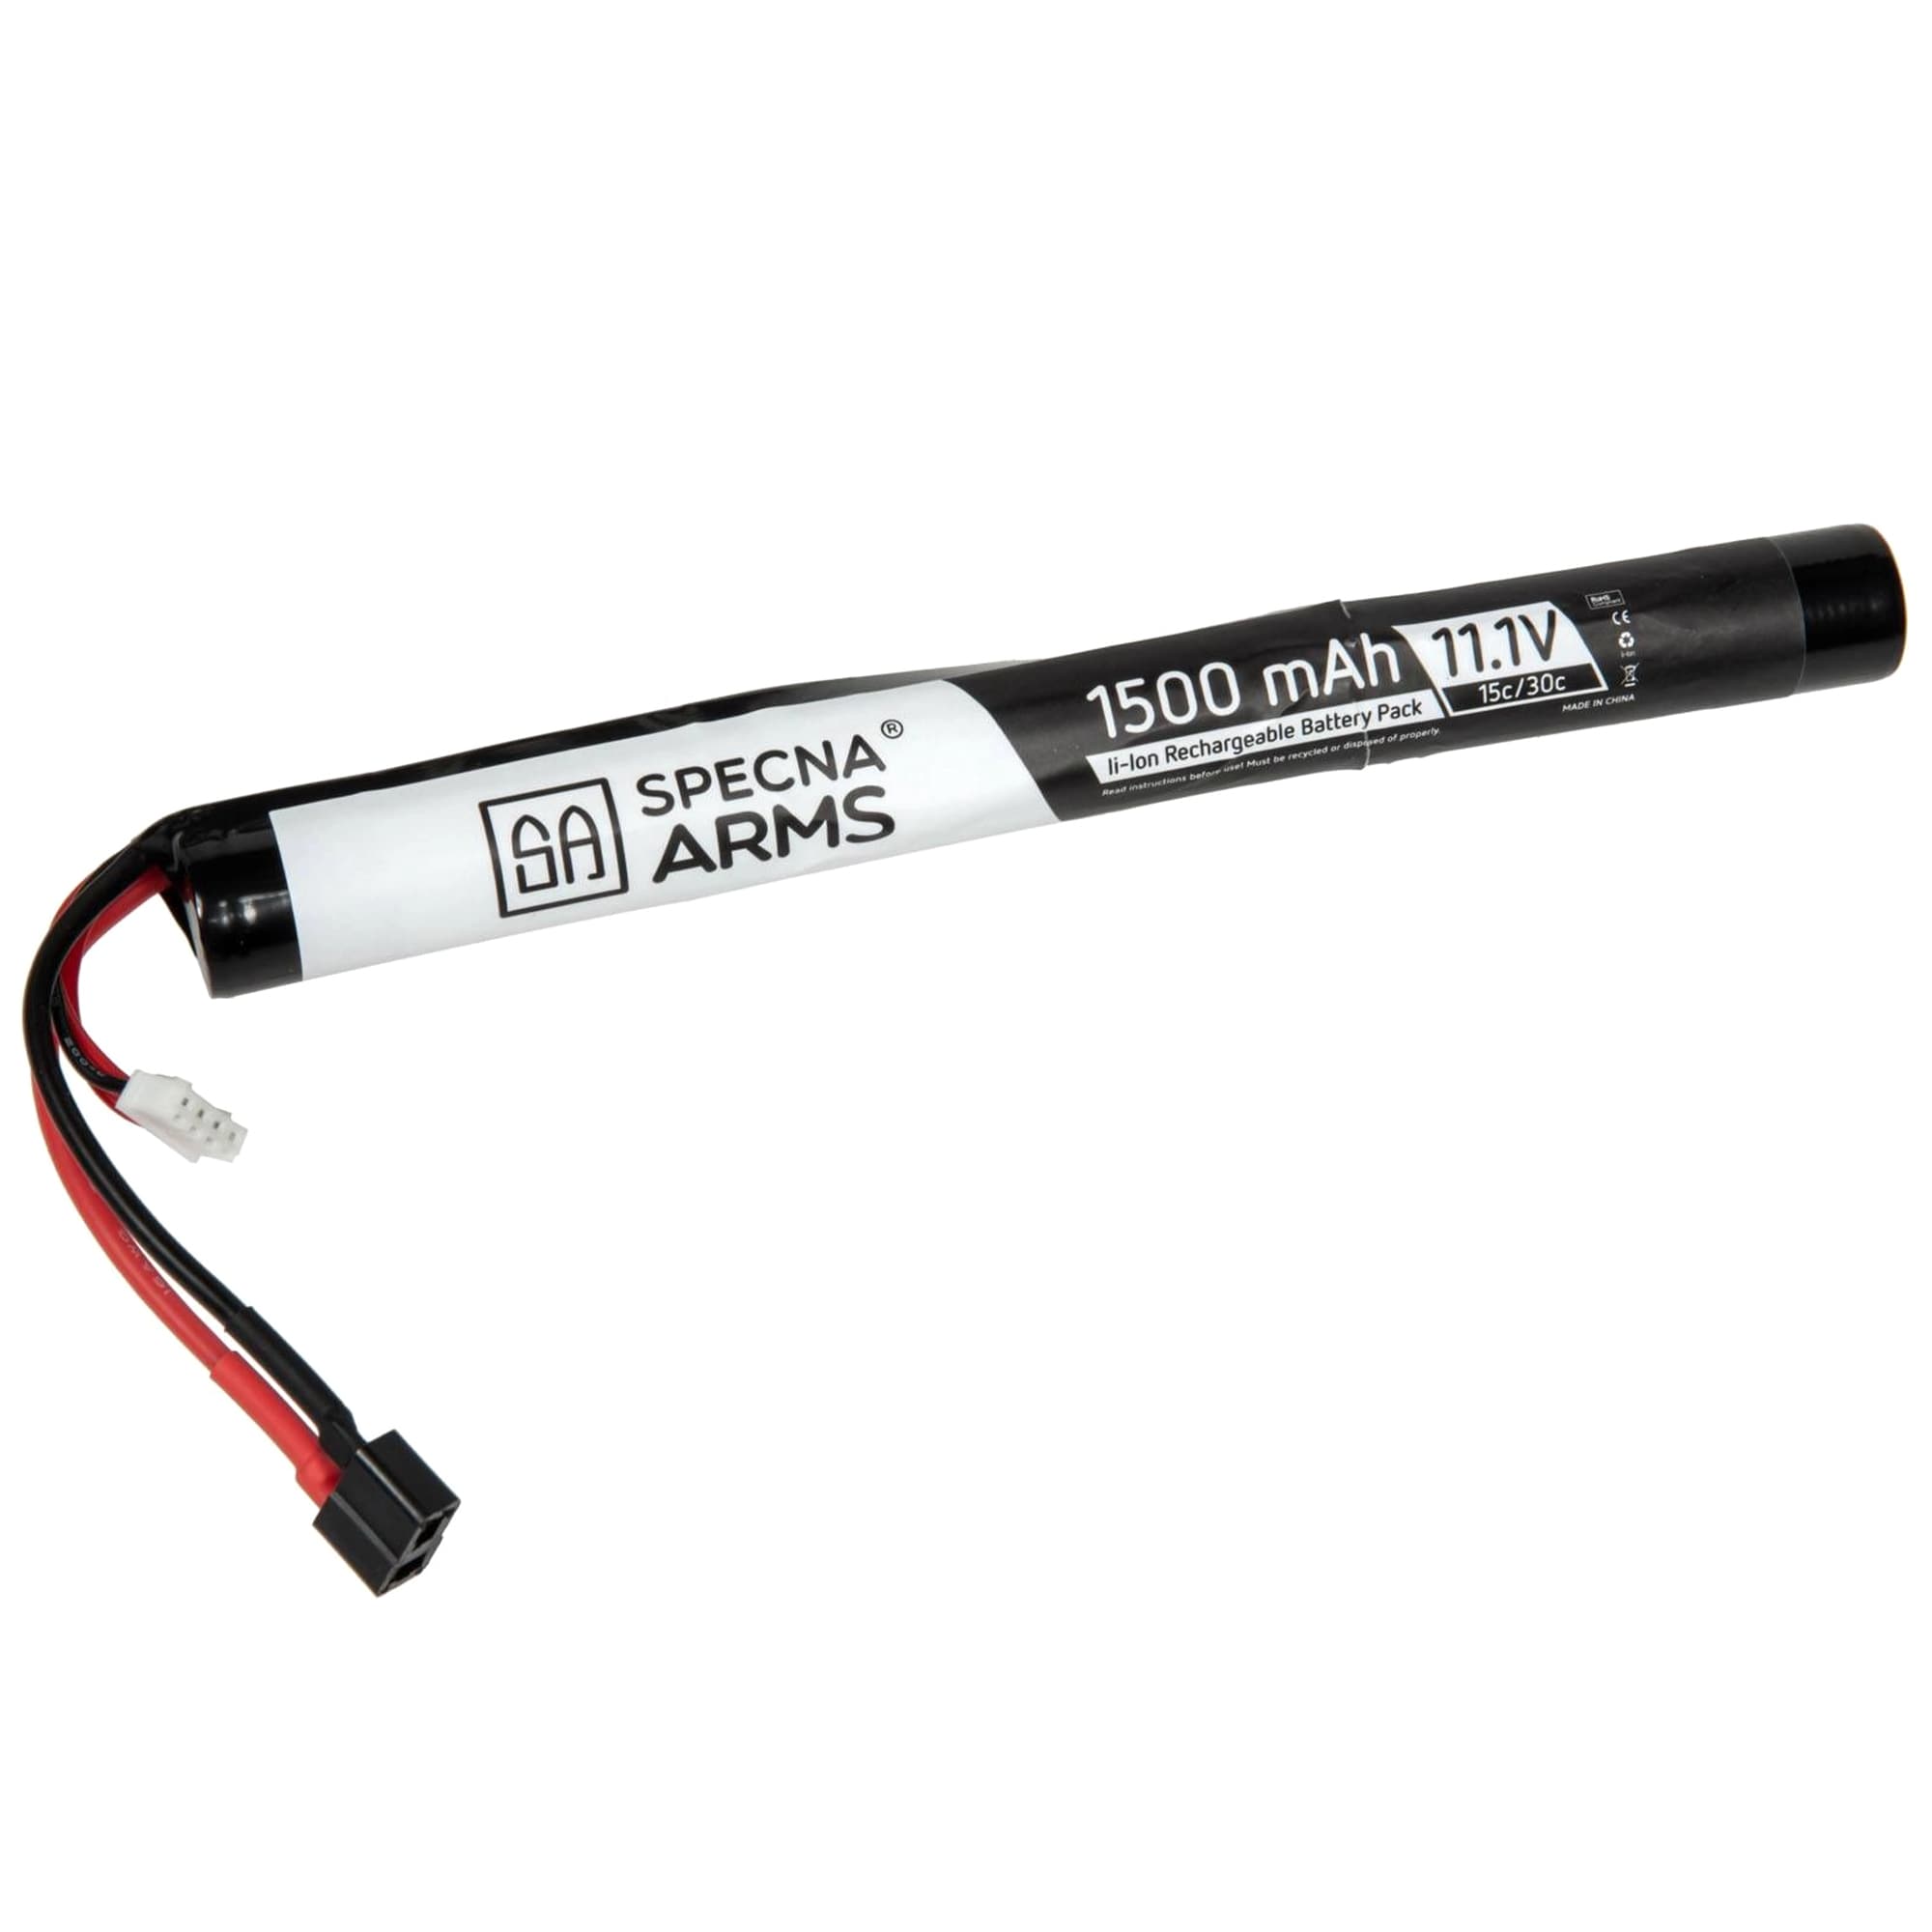 Akumulator ASG Specna Arms Stick pod pokrywę AK 1500mah 11,1V Deans 